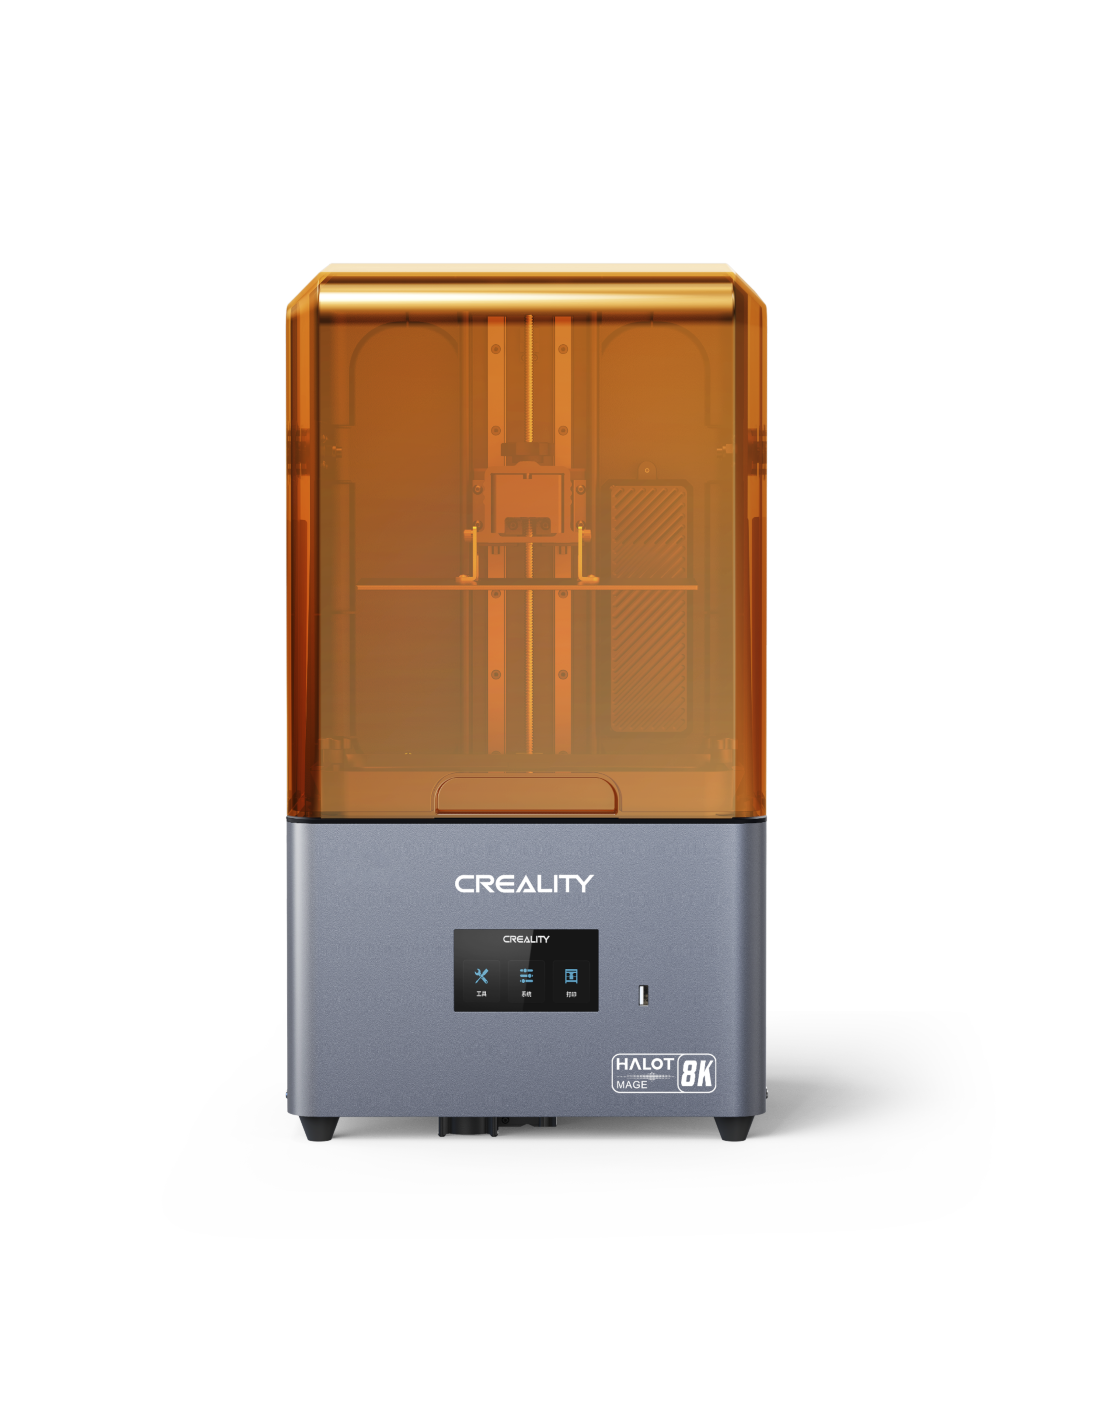 Creality Halot-Mage CL-103L 3D resin printer